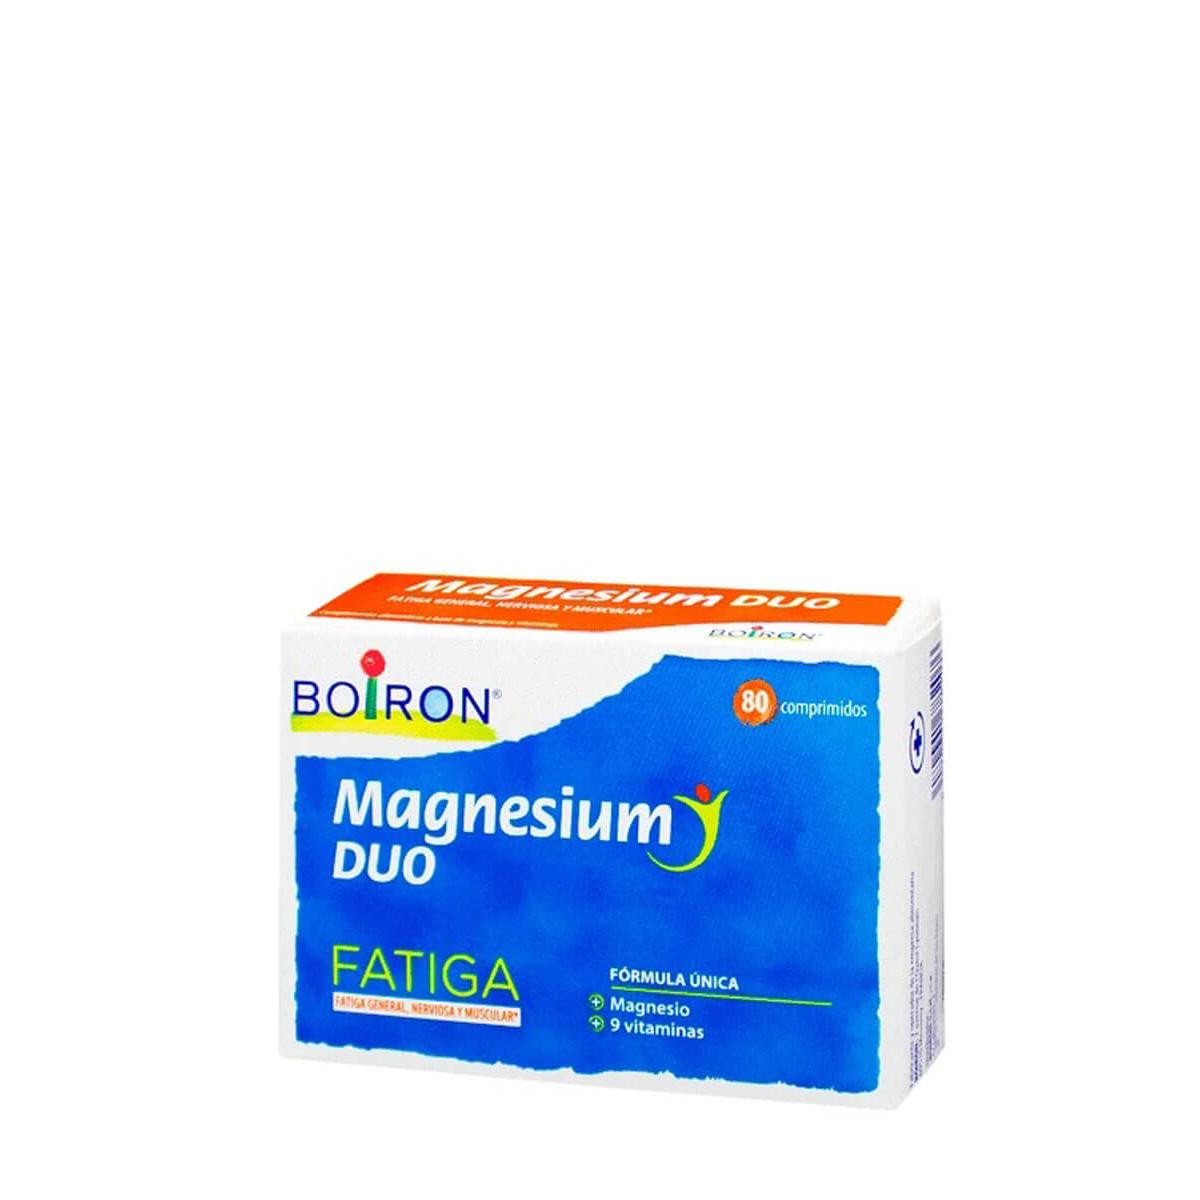 Boiron - Boiron magnesium duo 80 comprimidos